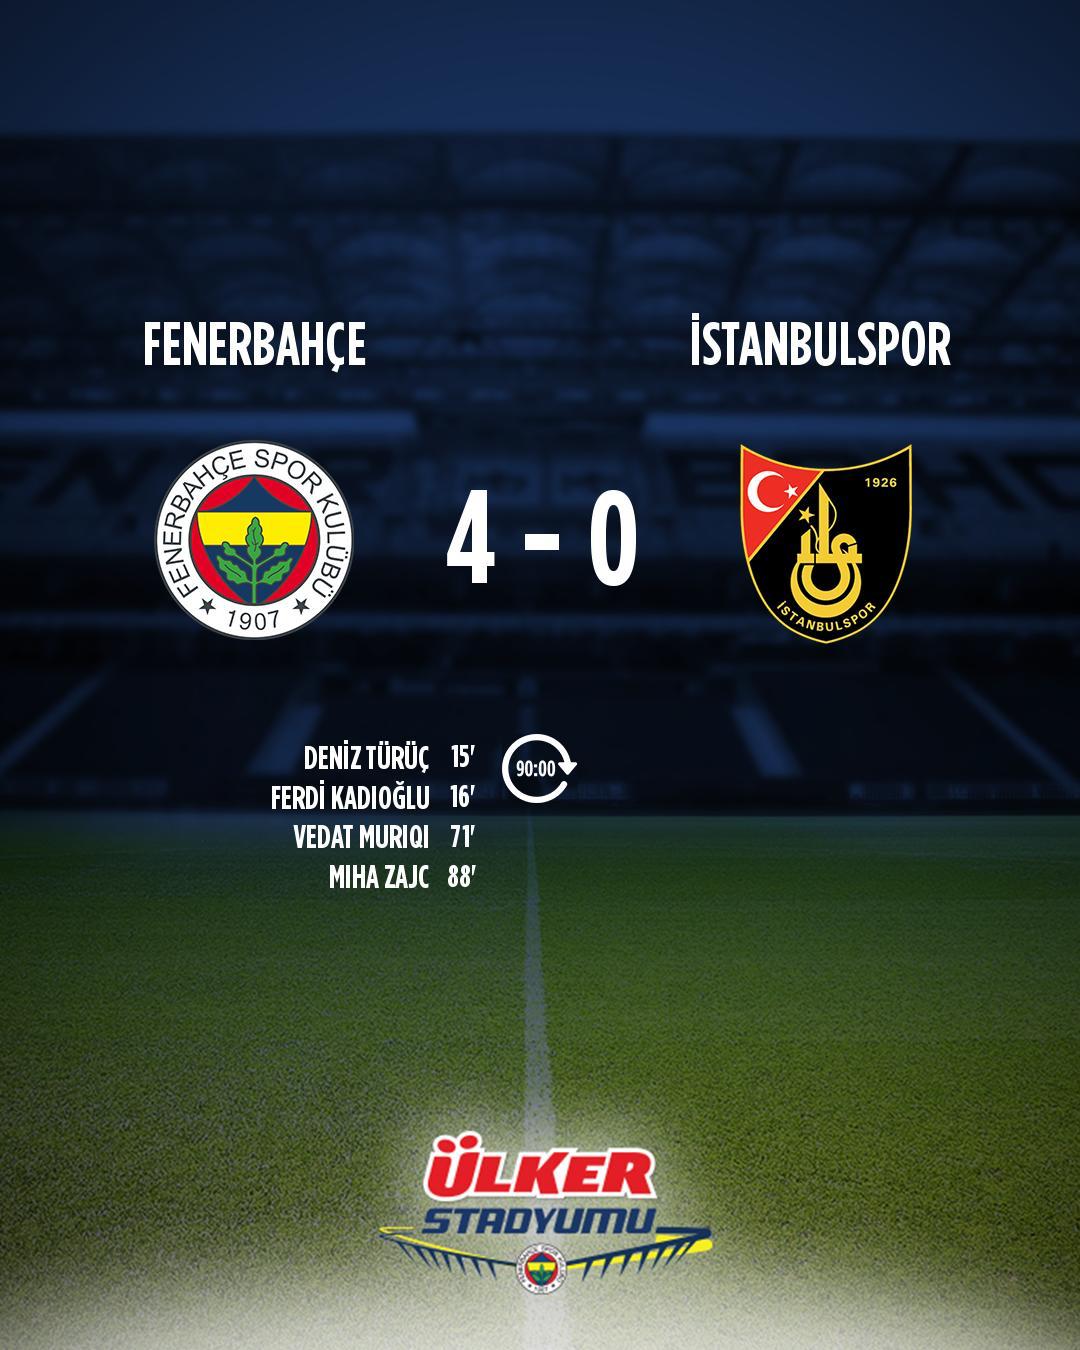 Fenerbahçe vs Trabzonspor: A Match Between Turkish Football Giants